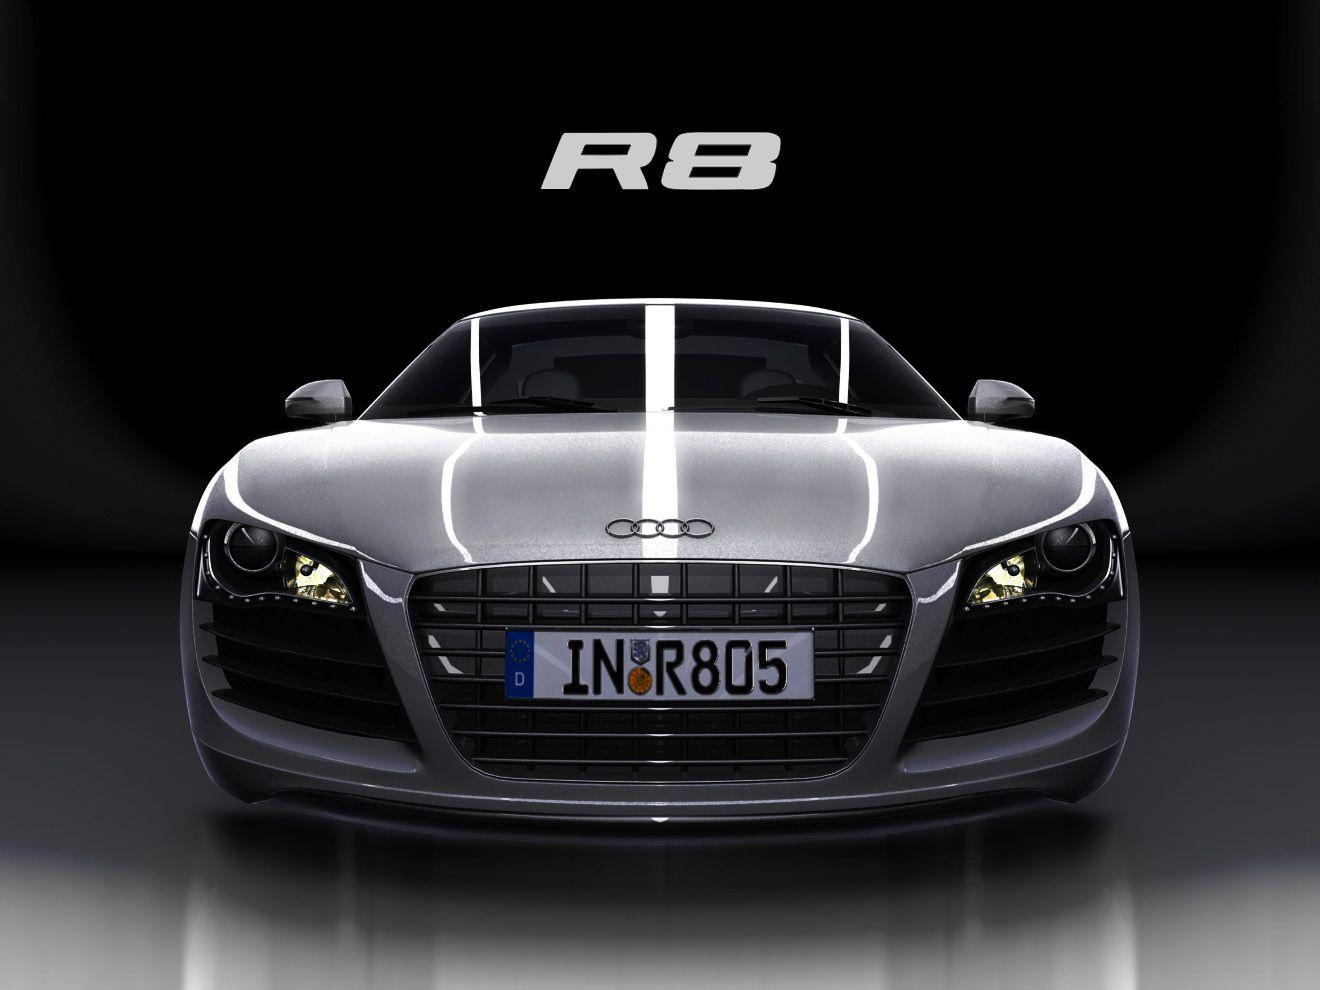 Black Audi R8 Logo - Audi R8